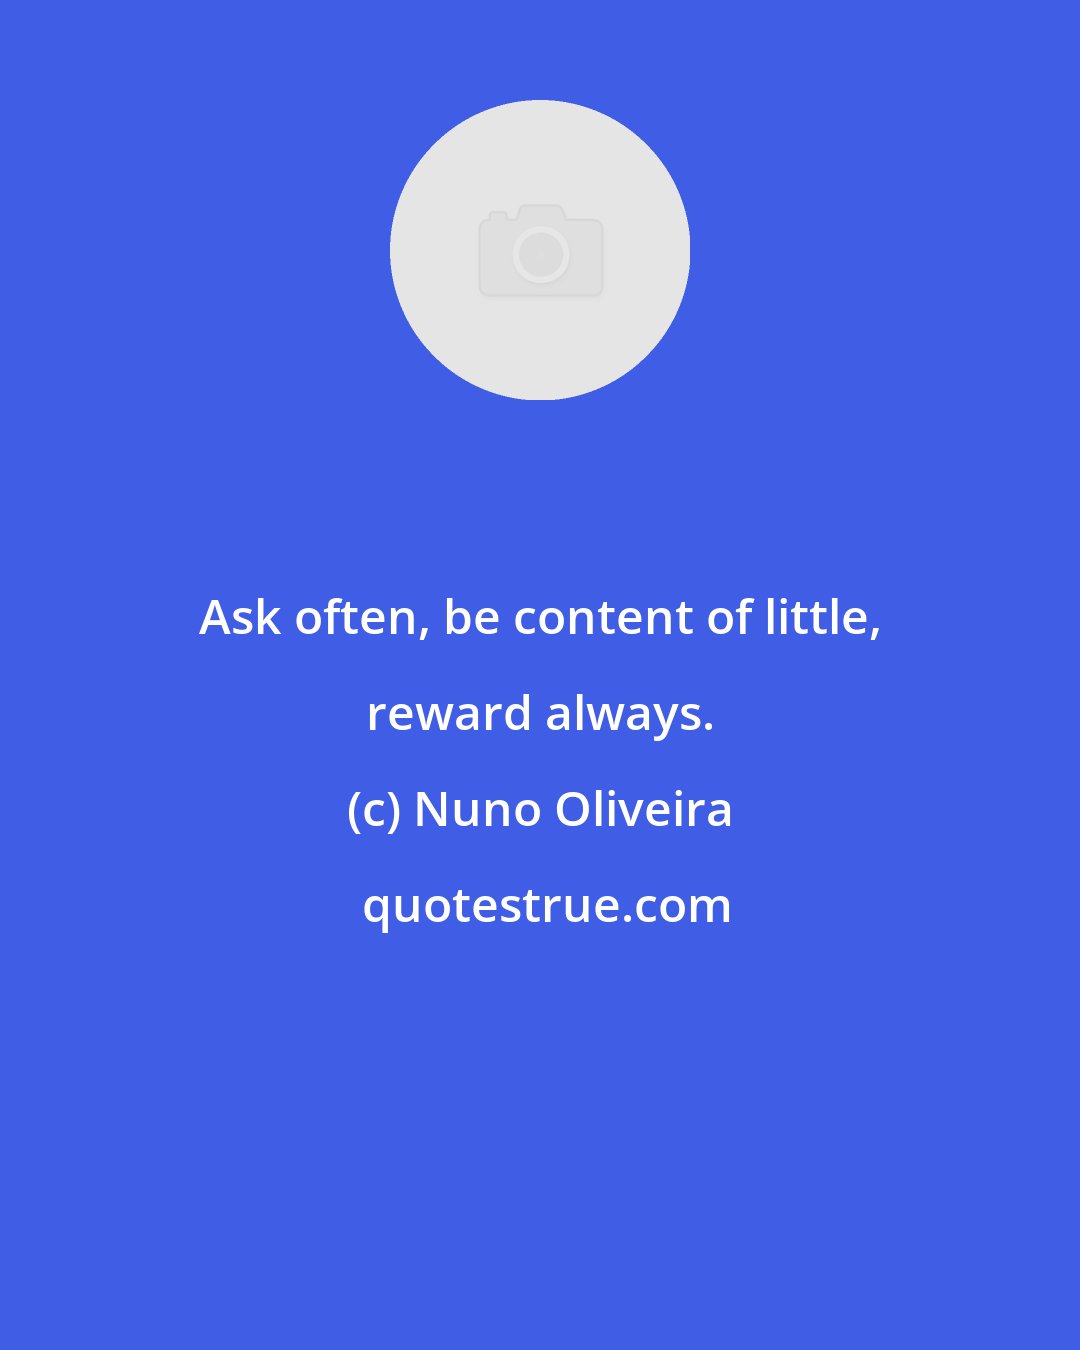 Nuno Oliveira: Ask often, be content of little, reward always.